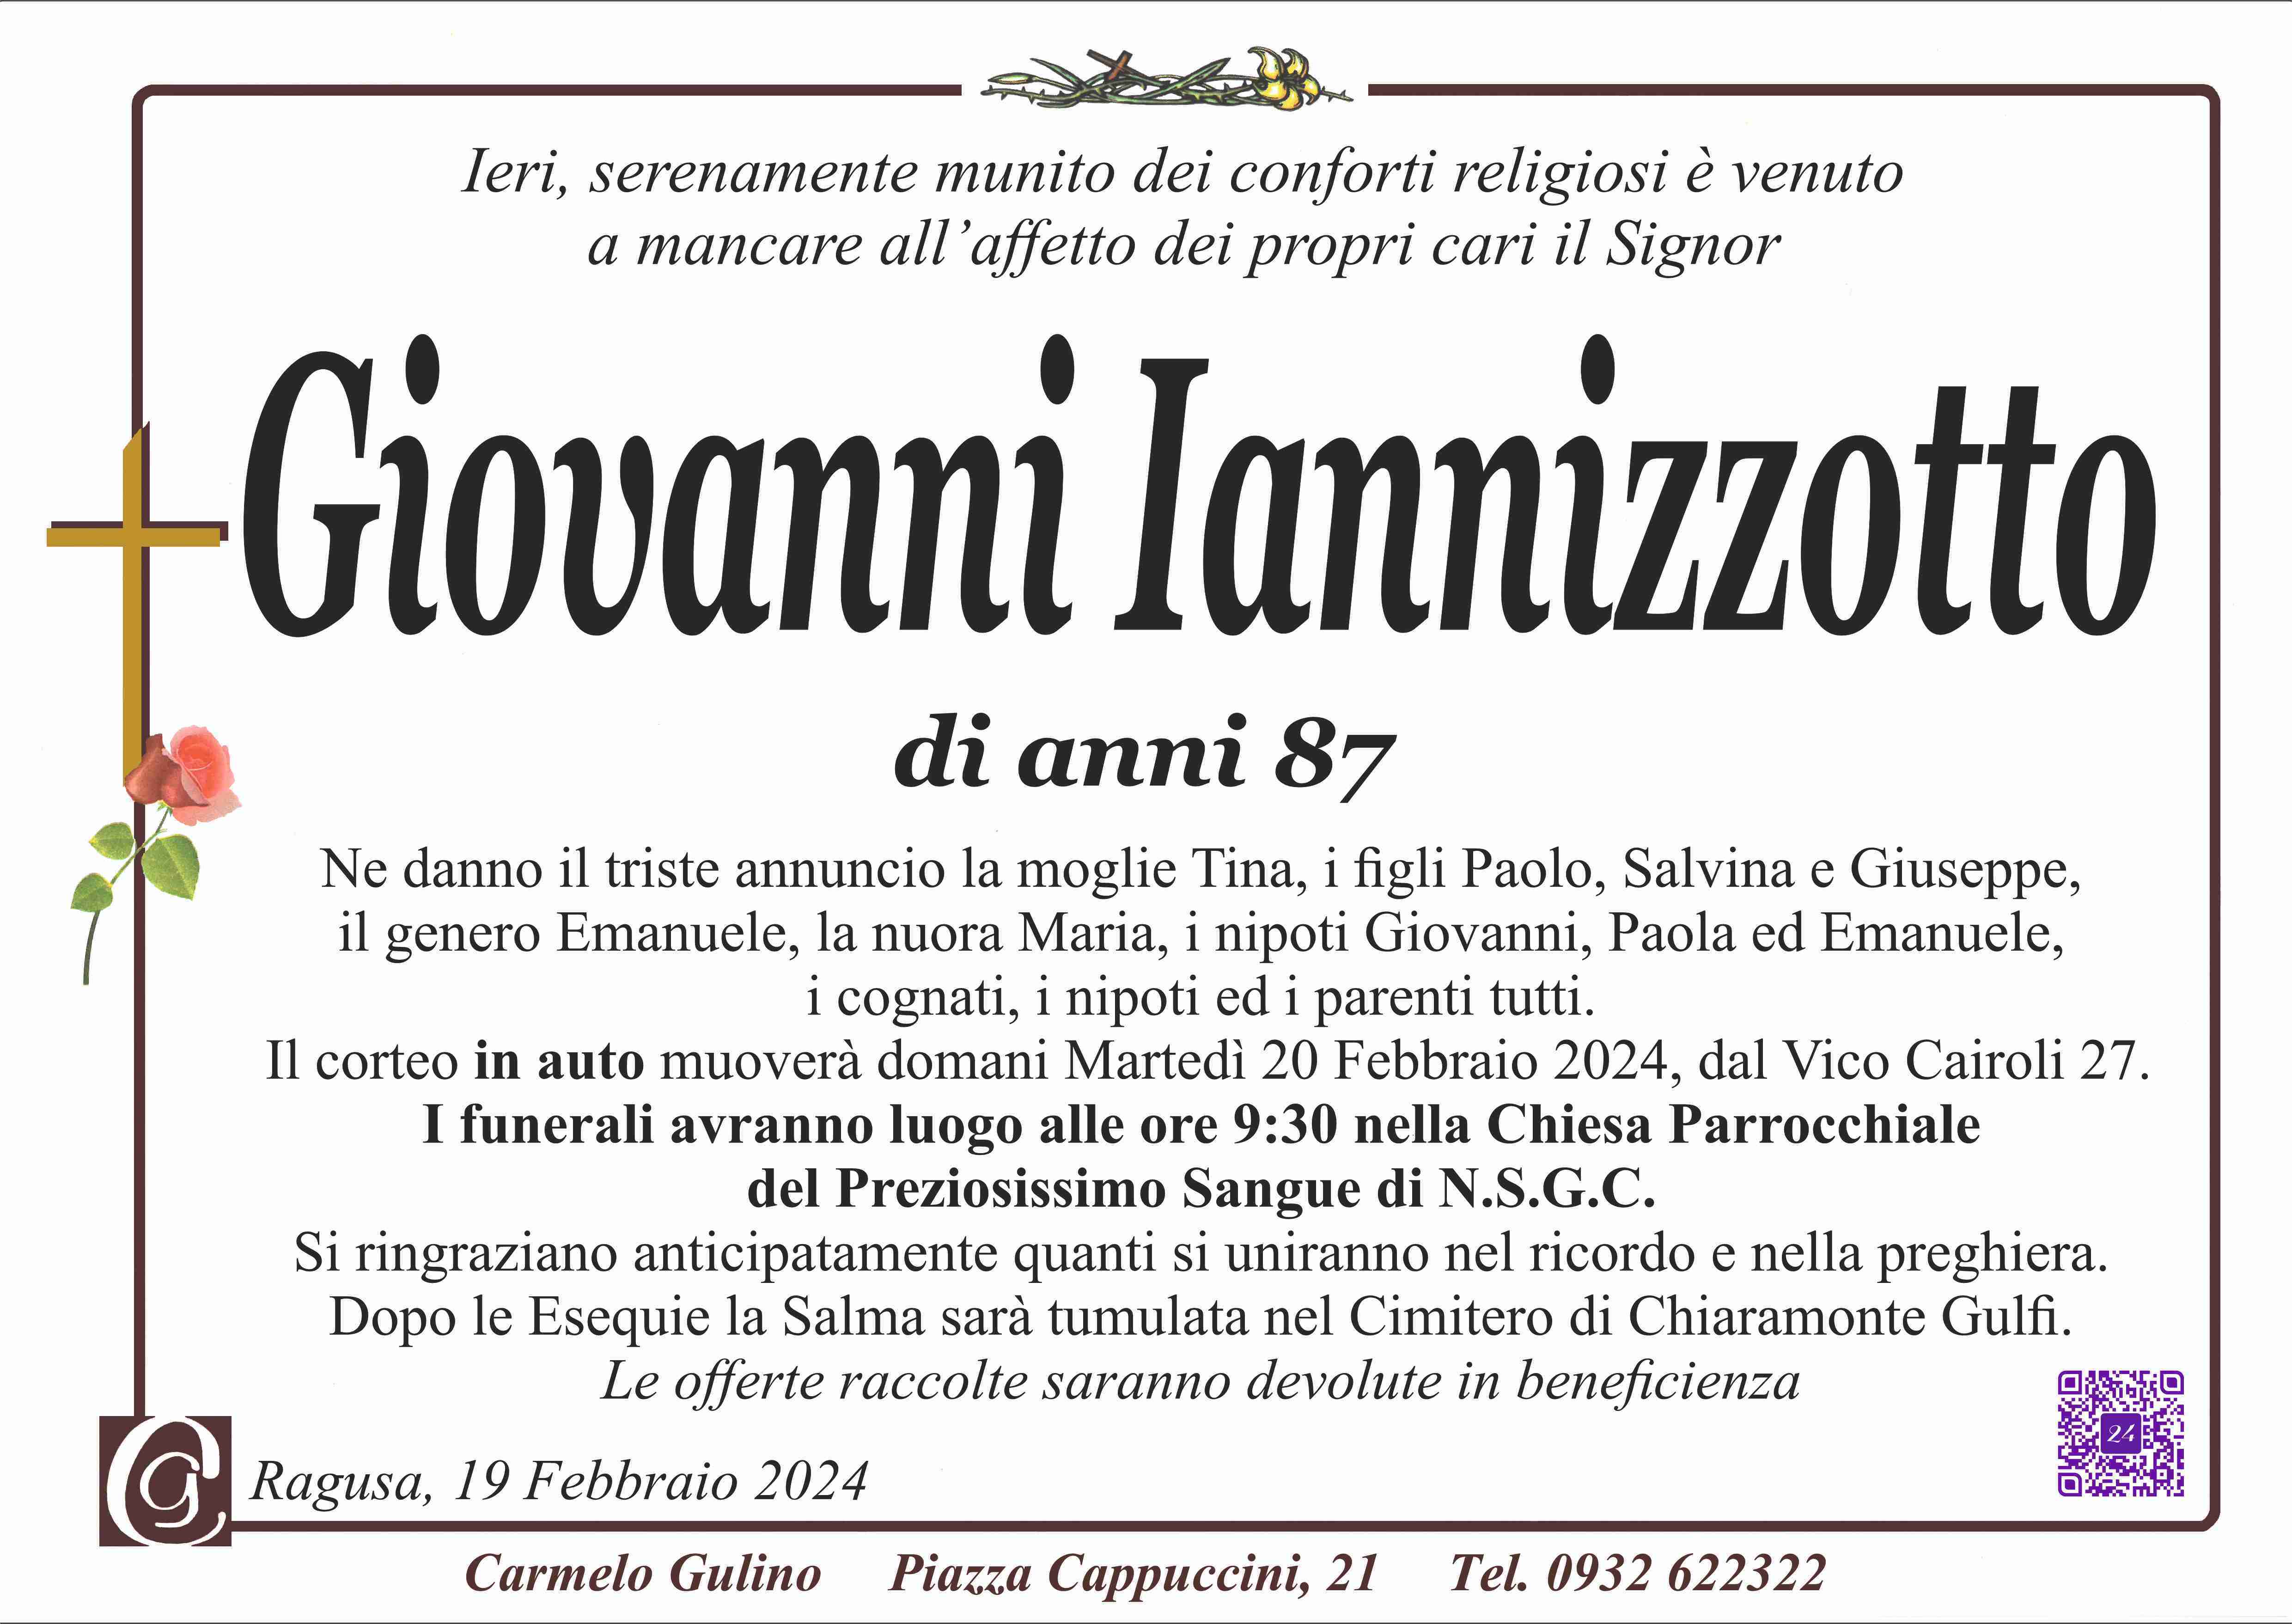 Iannizzotto Giovanni